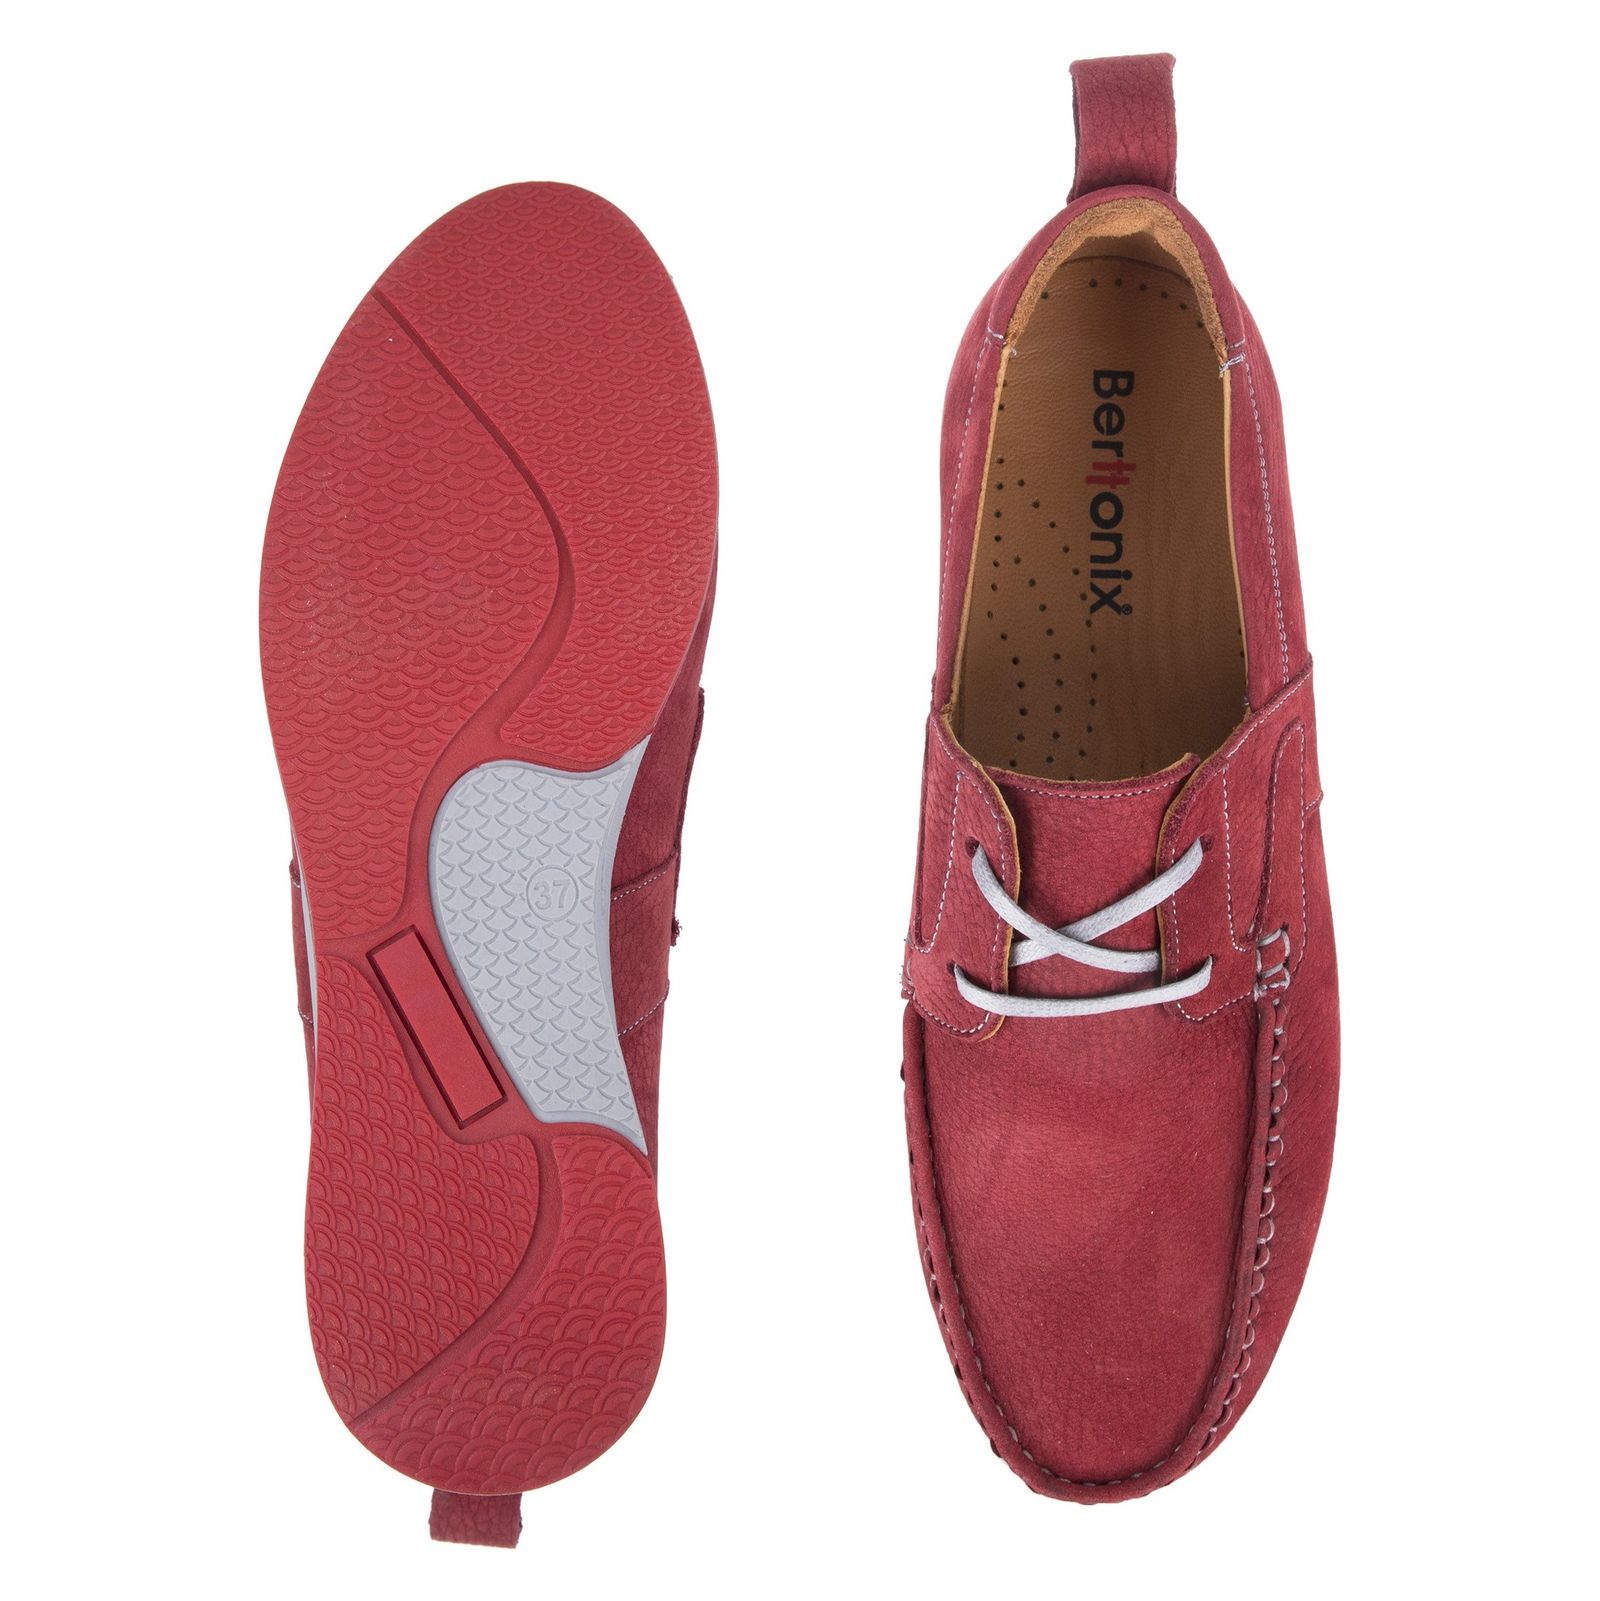 کفش تخت چرم زنانه - برتونیکس - قرمز - 3